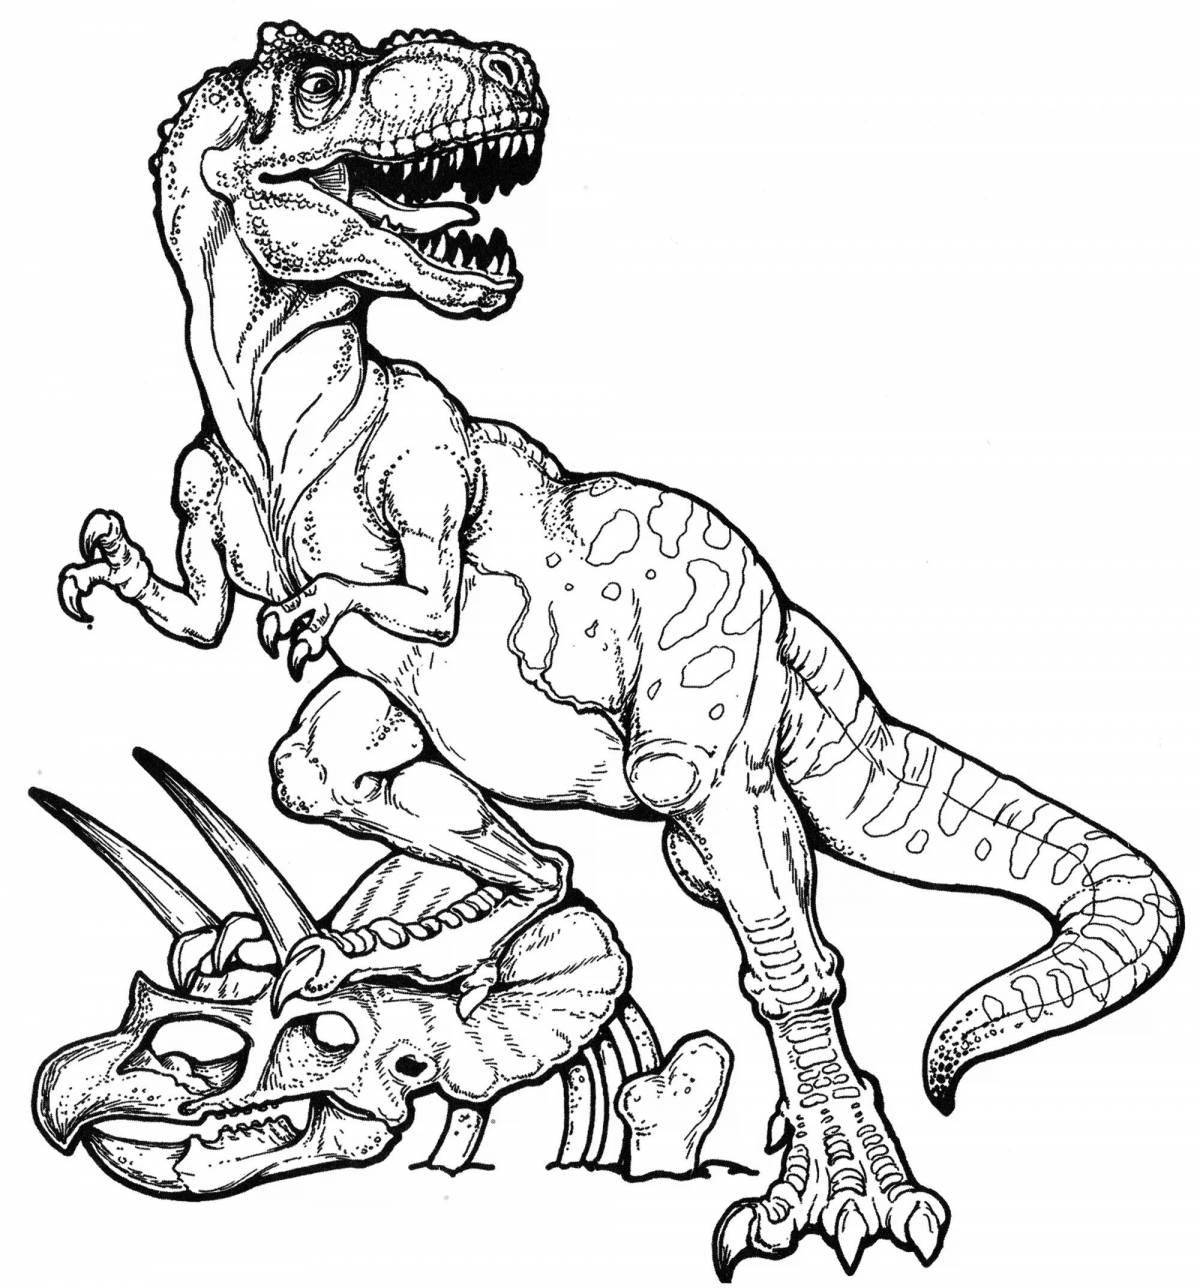 Tarbosaurus creative truck coloring page